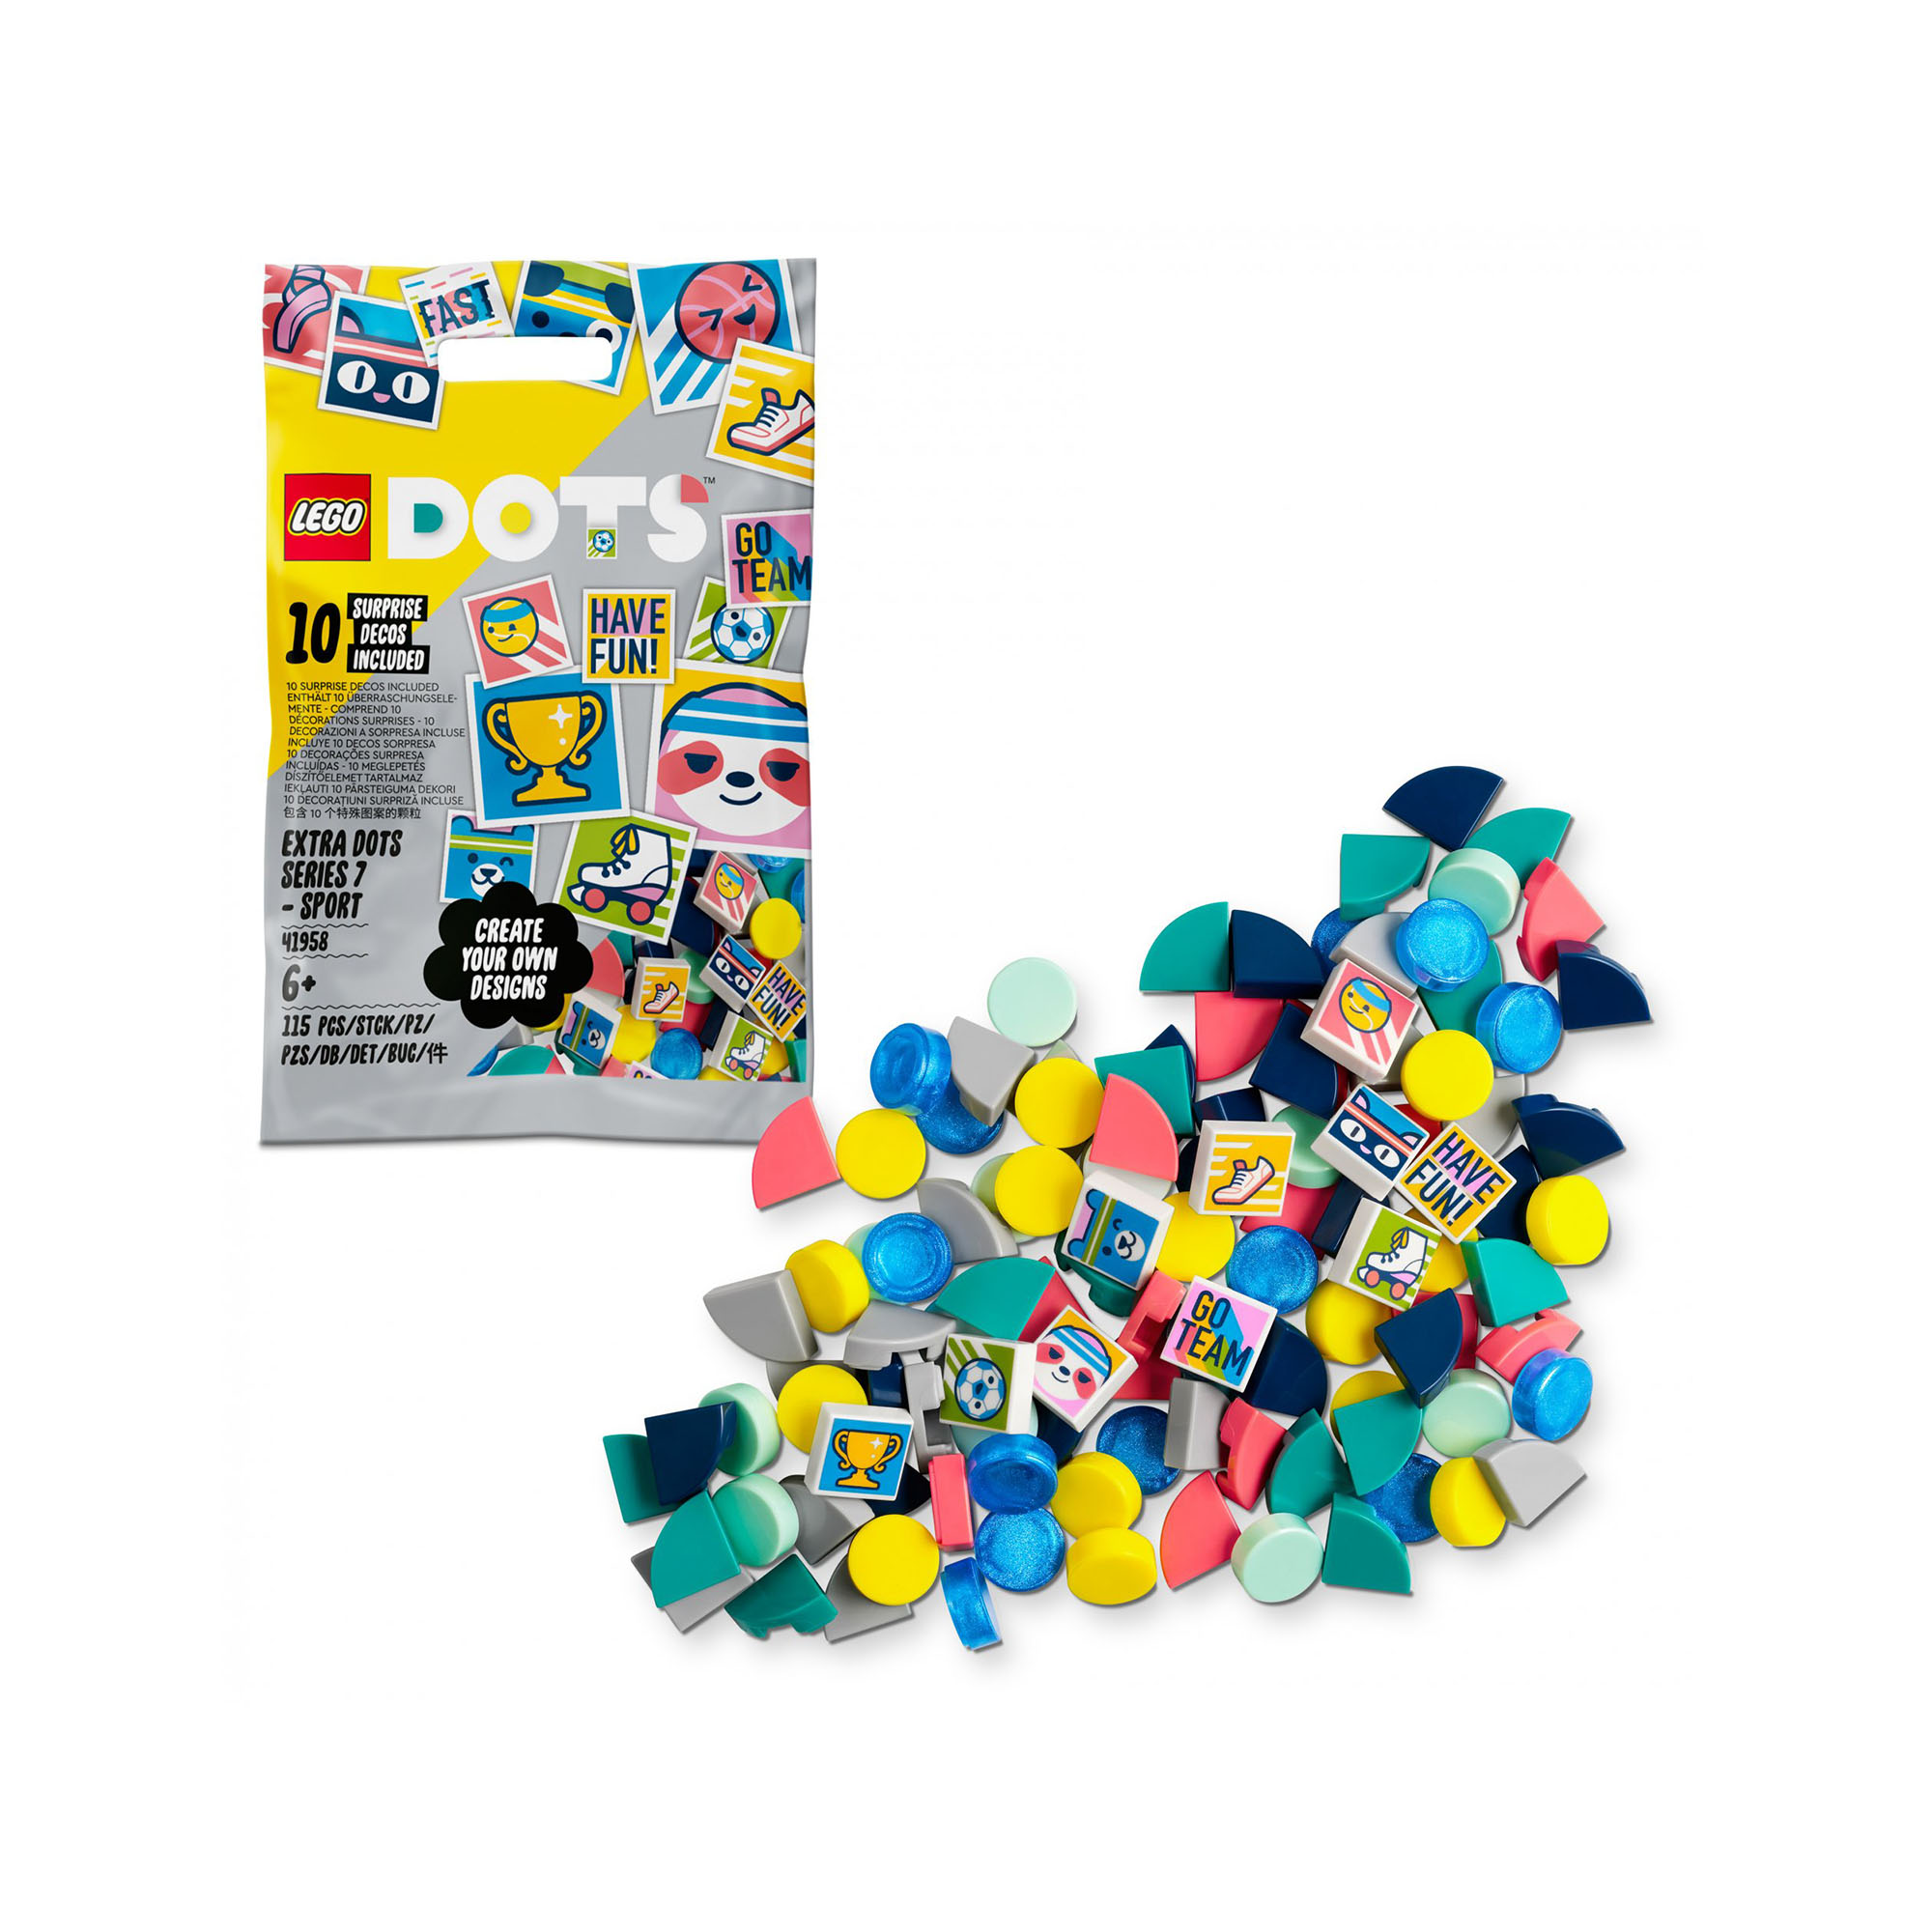 LEGO DOTS Extra DOTS Serie 7 - SPORT, Set Fai da Te per Costruire Braccialetti e 41958, , large